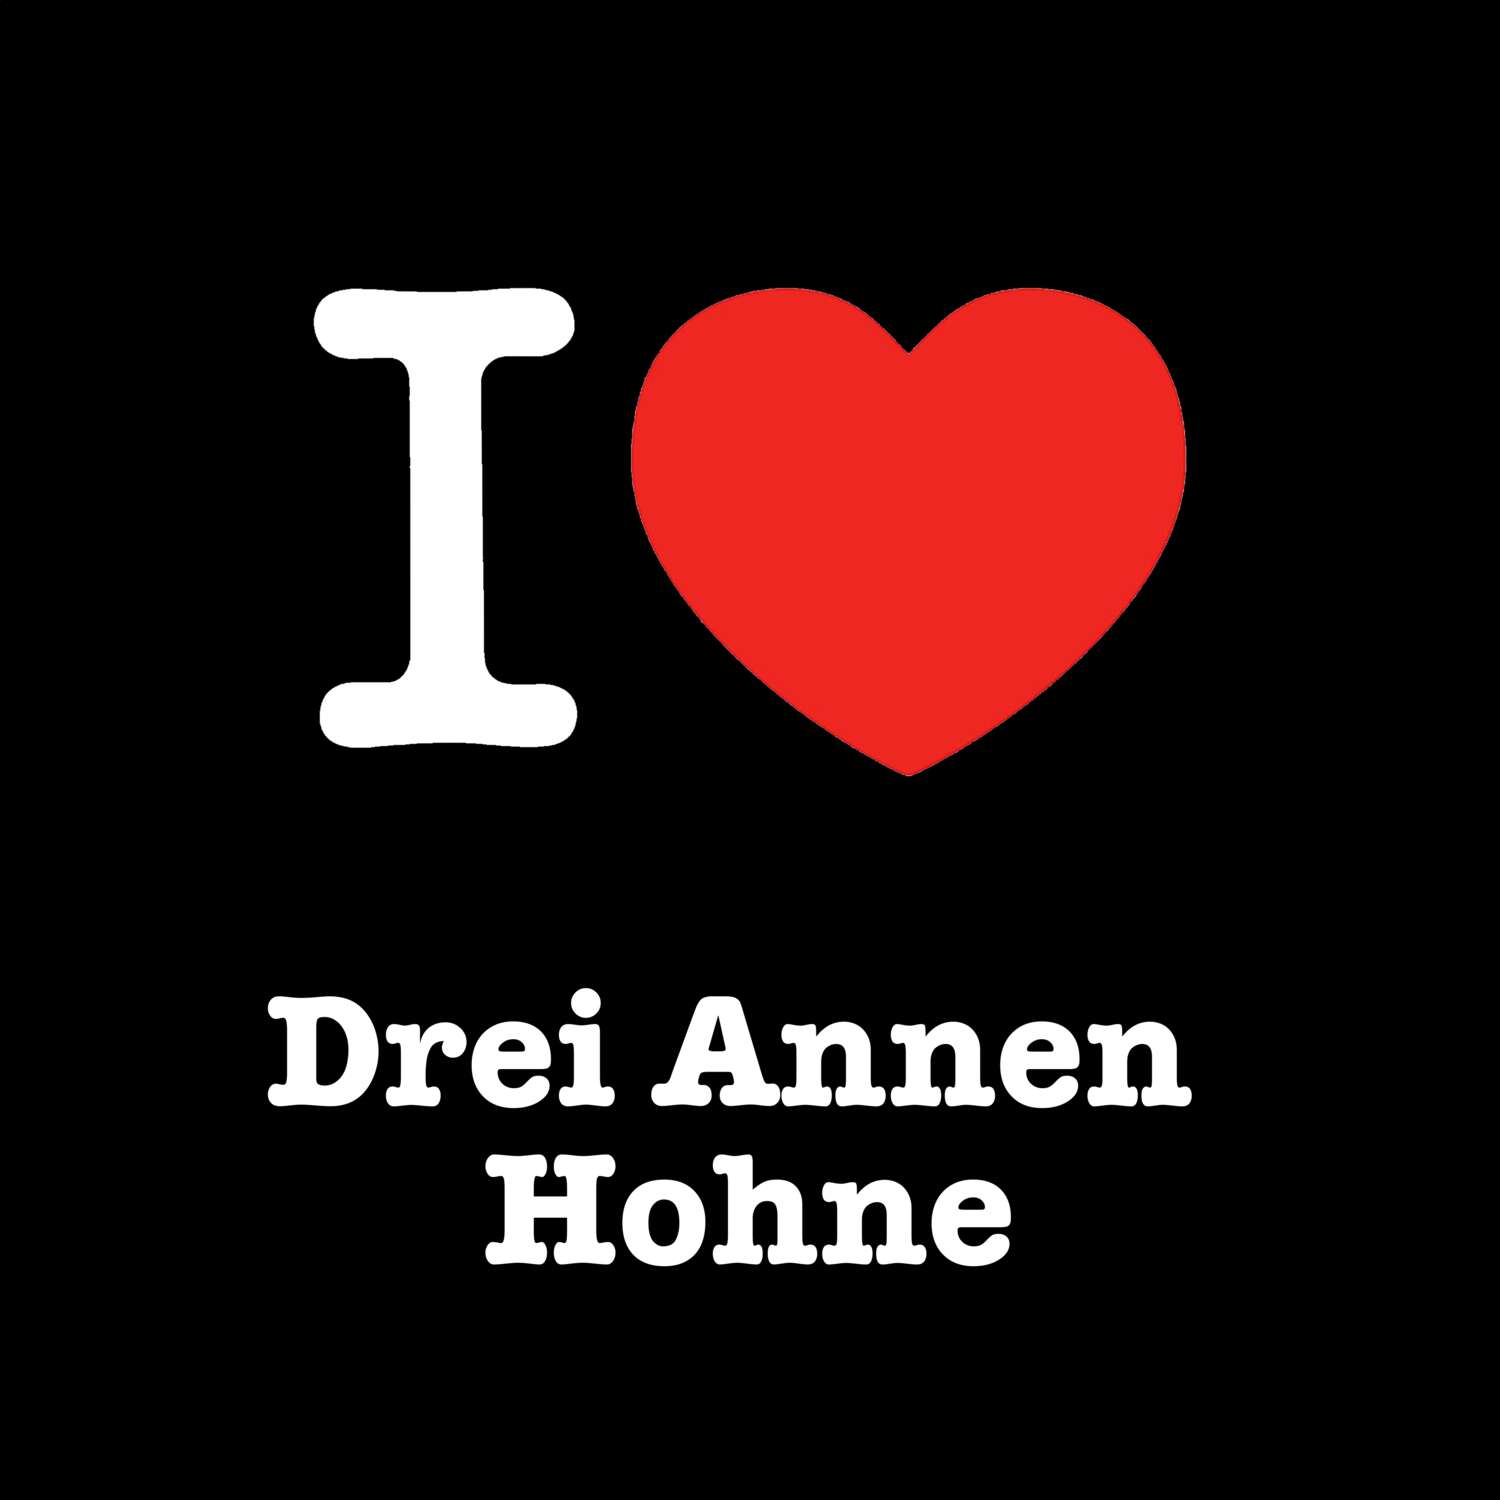 Drei Annen Hohne T-Shirt »I love«